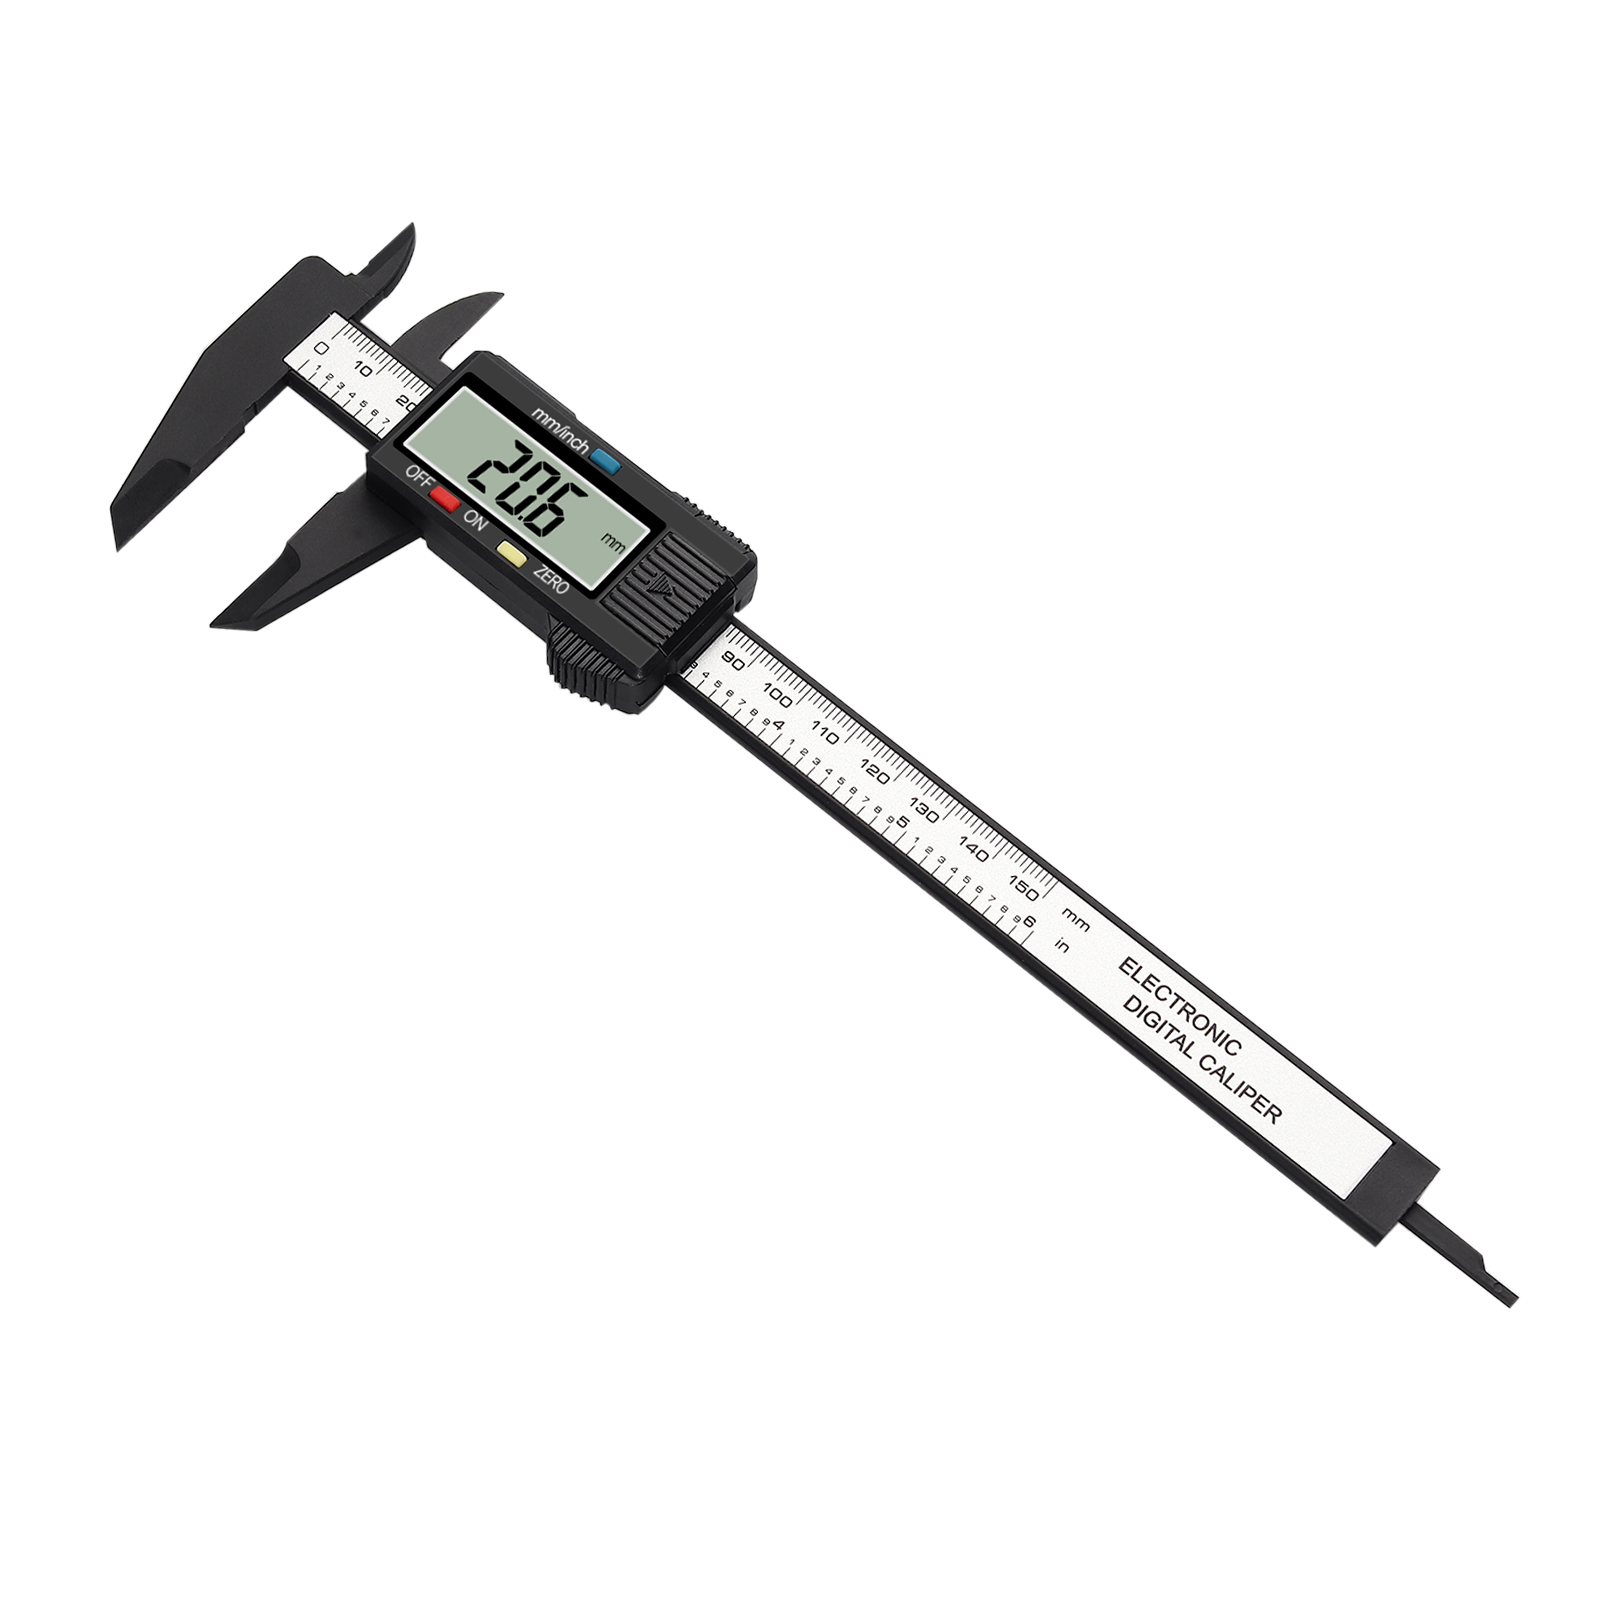 Digital Vernier Caliper+Feeler Gauge 6/"Stainless Steel Electronic Measuring Tool